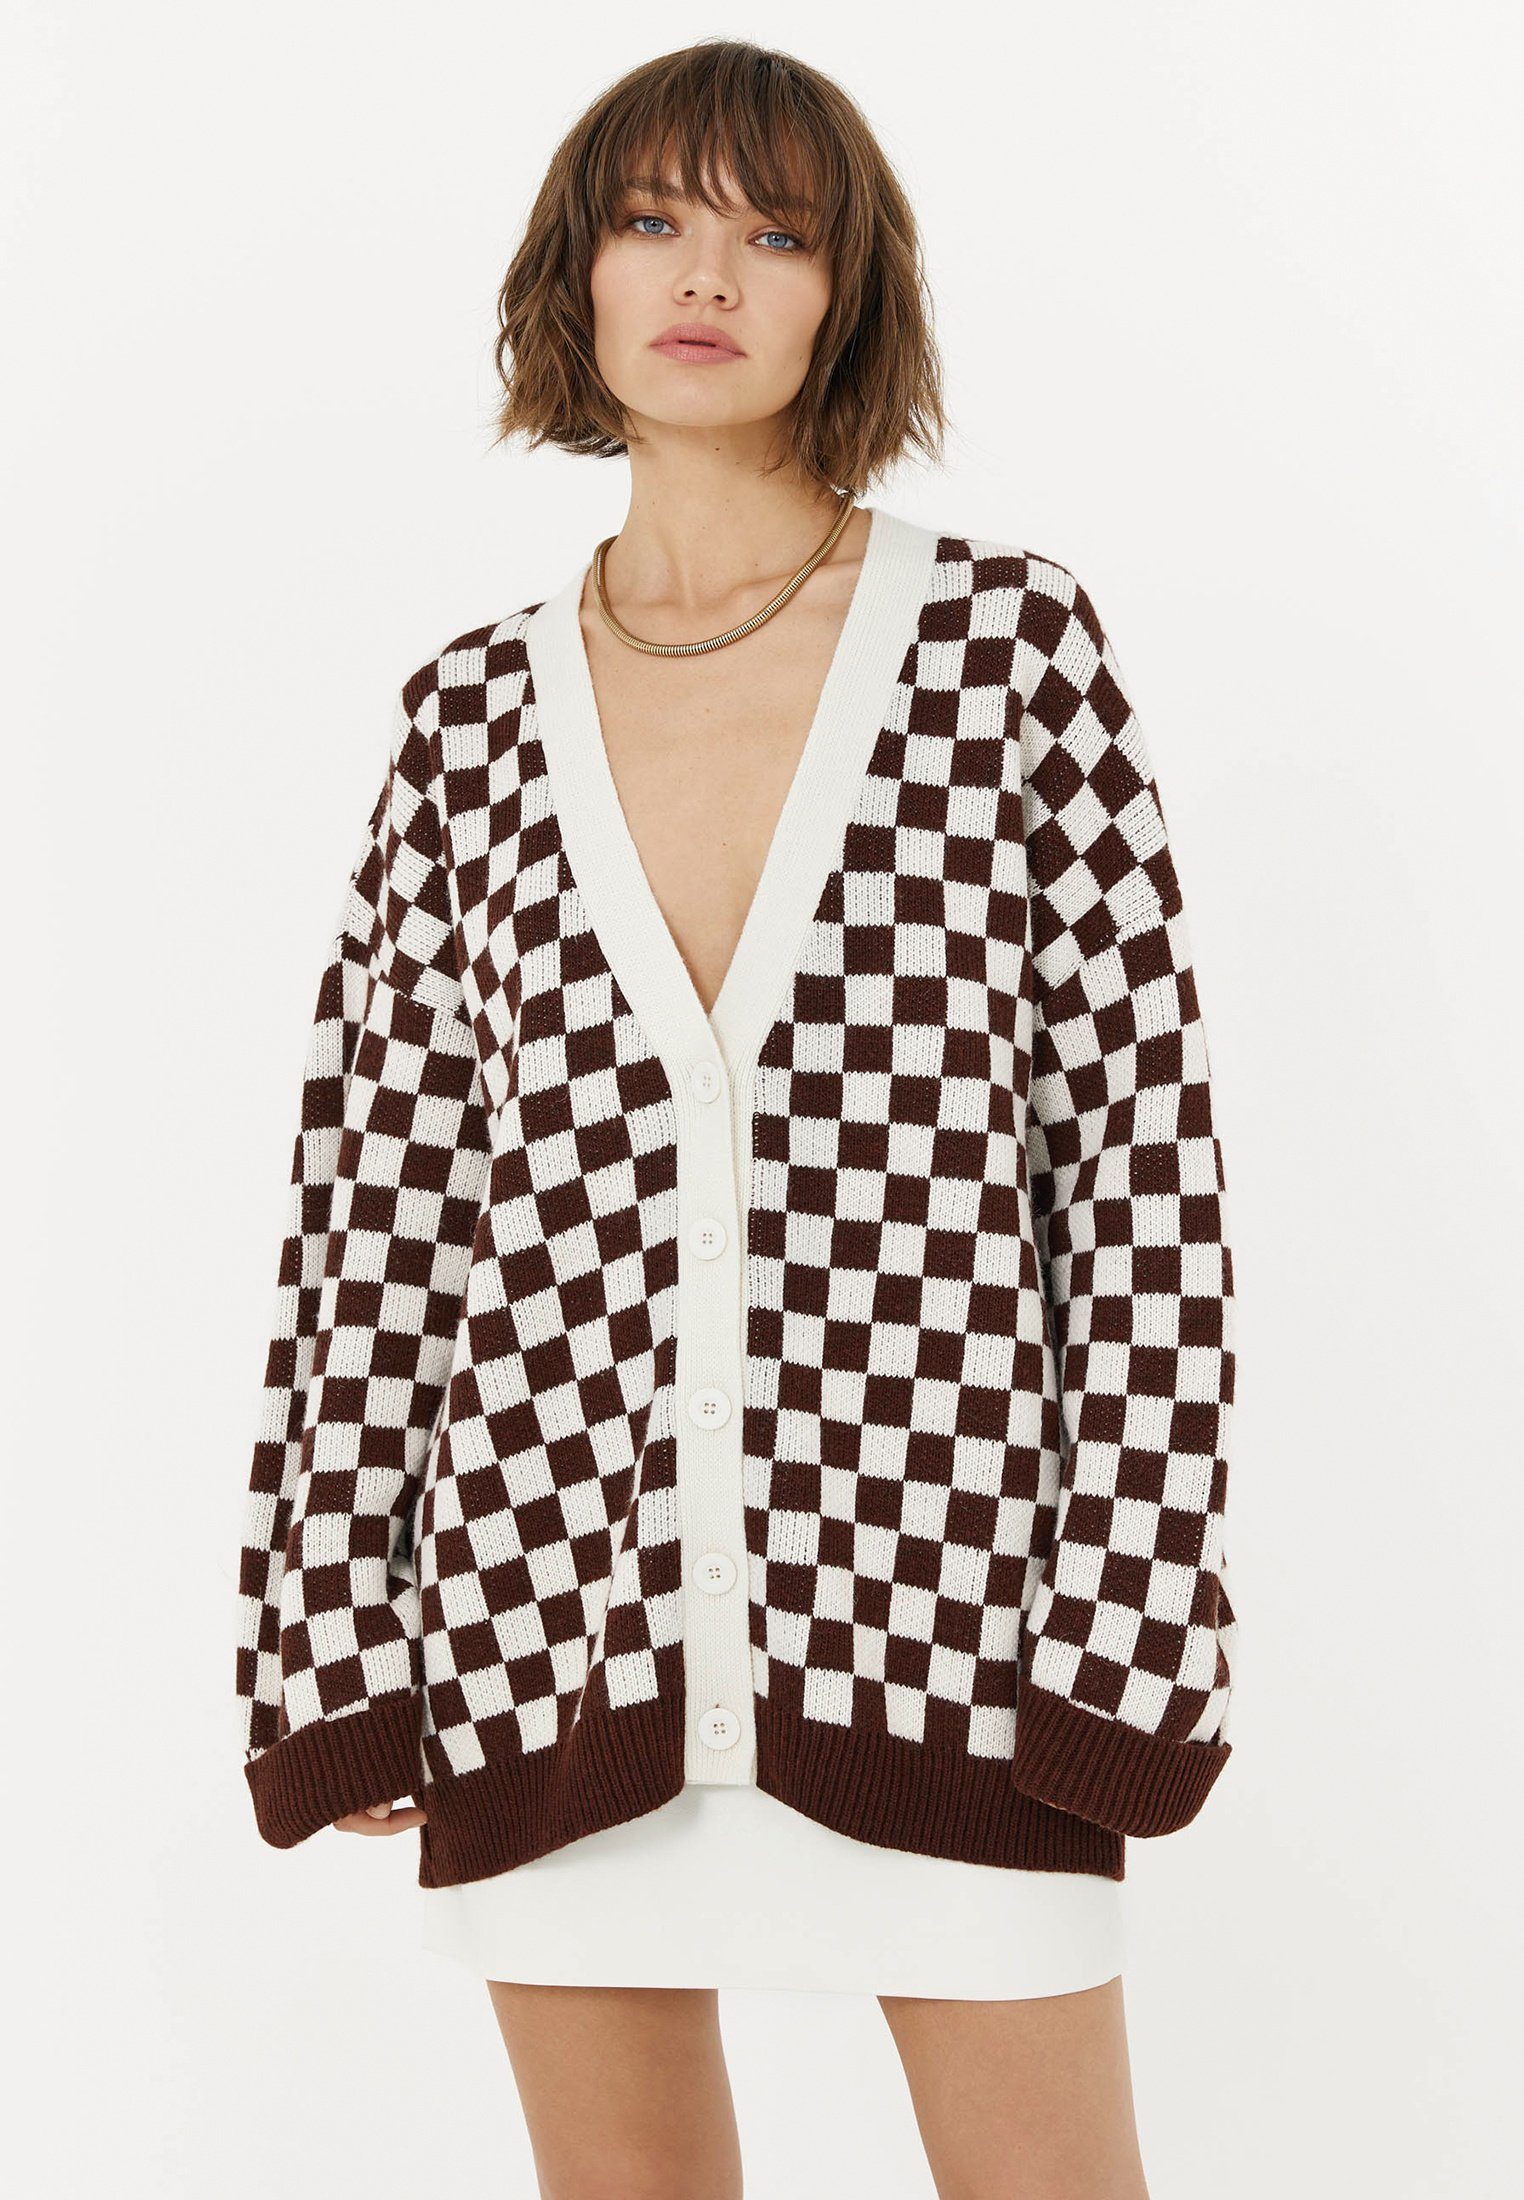 Checkered Cardigan TOPTOP cardigan STUDIO BRAUN knit